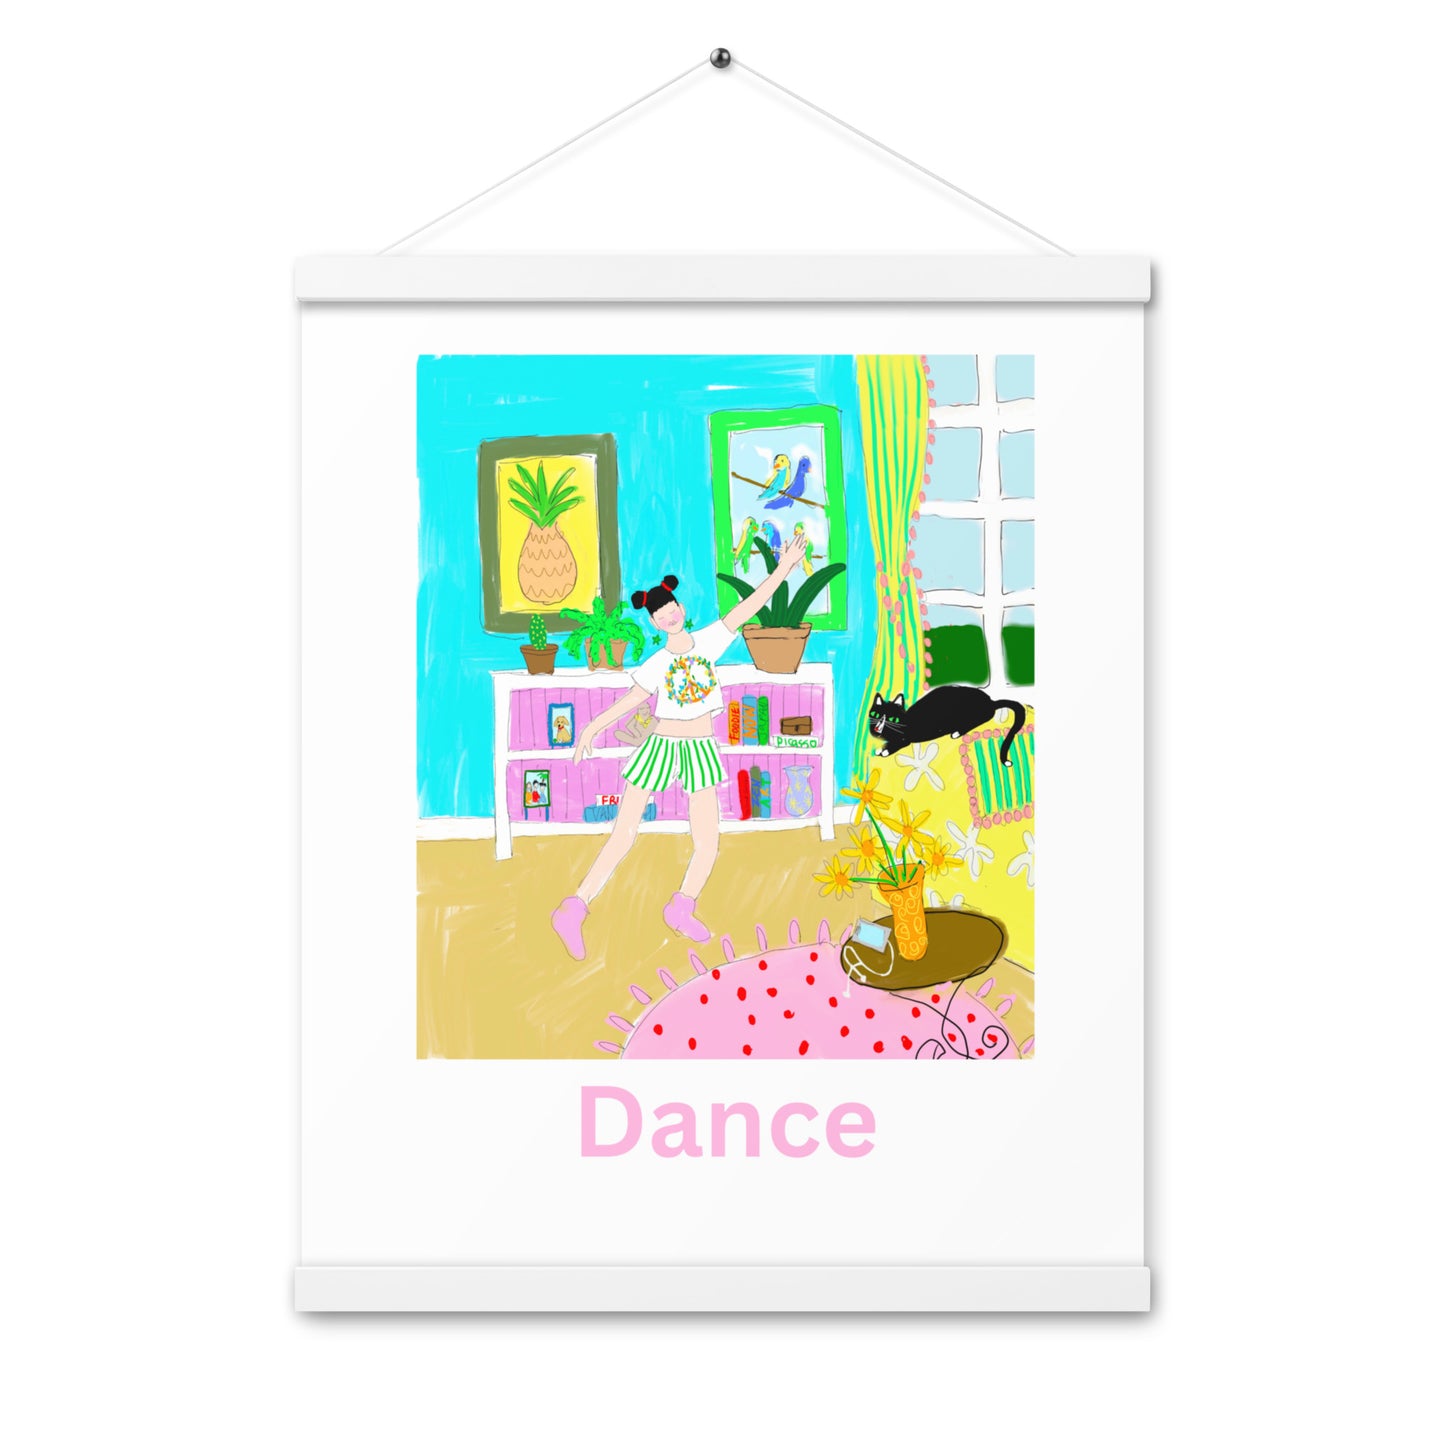 Dance - Ann From Japan